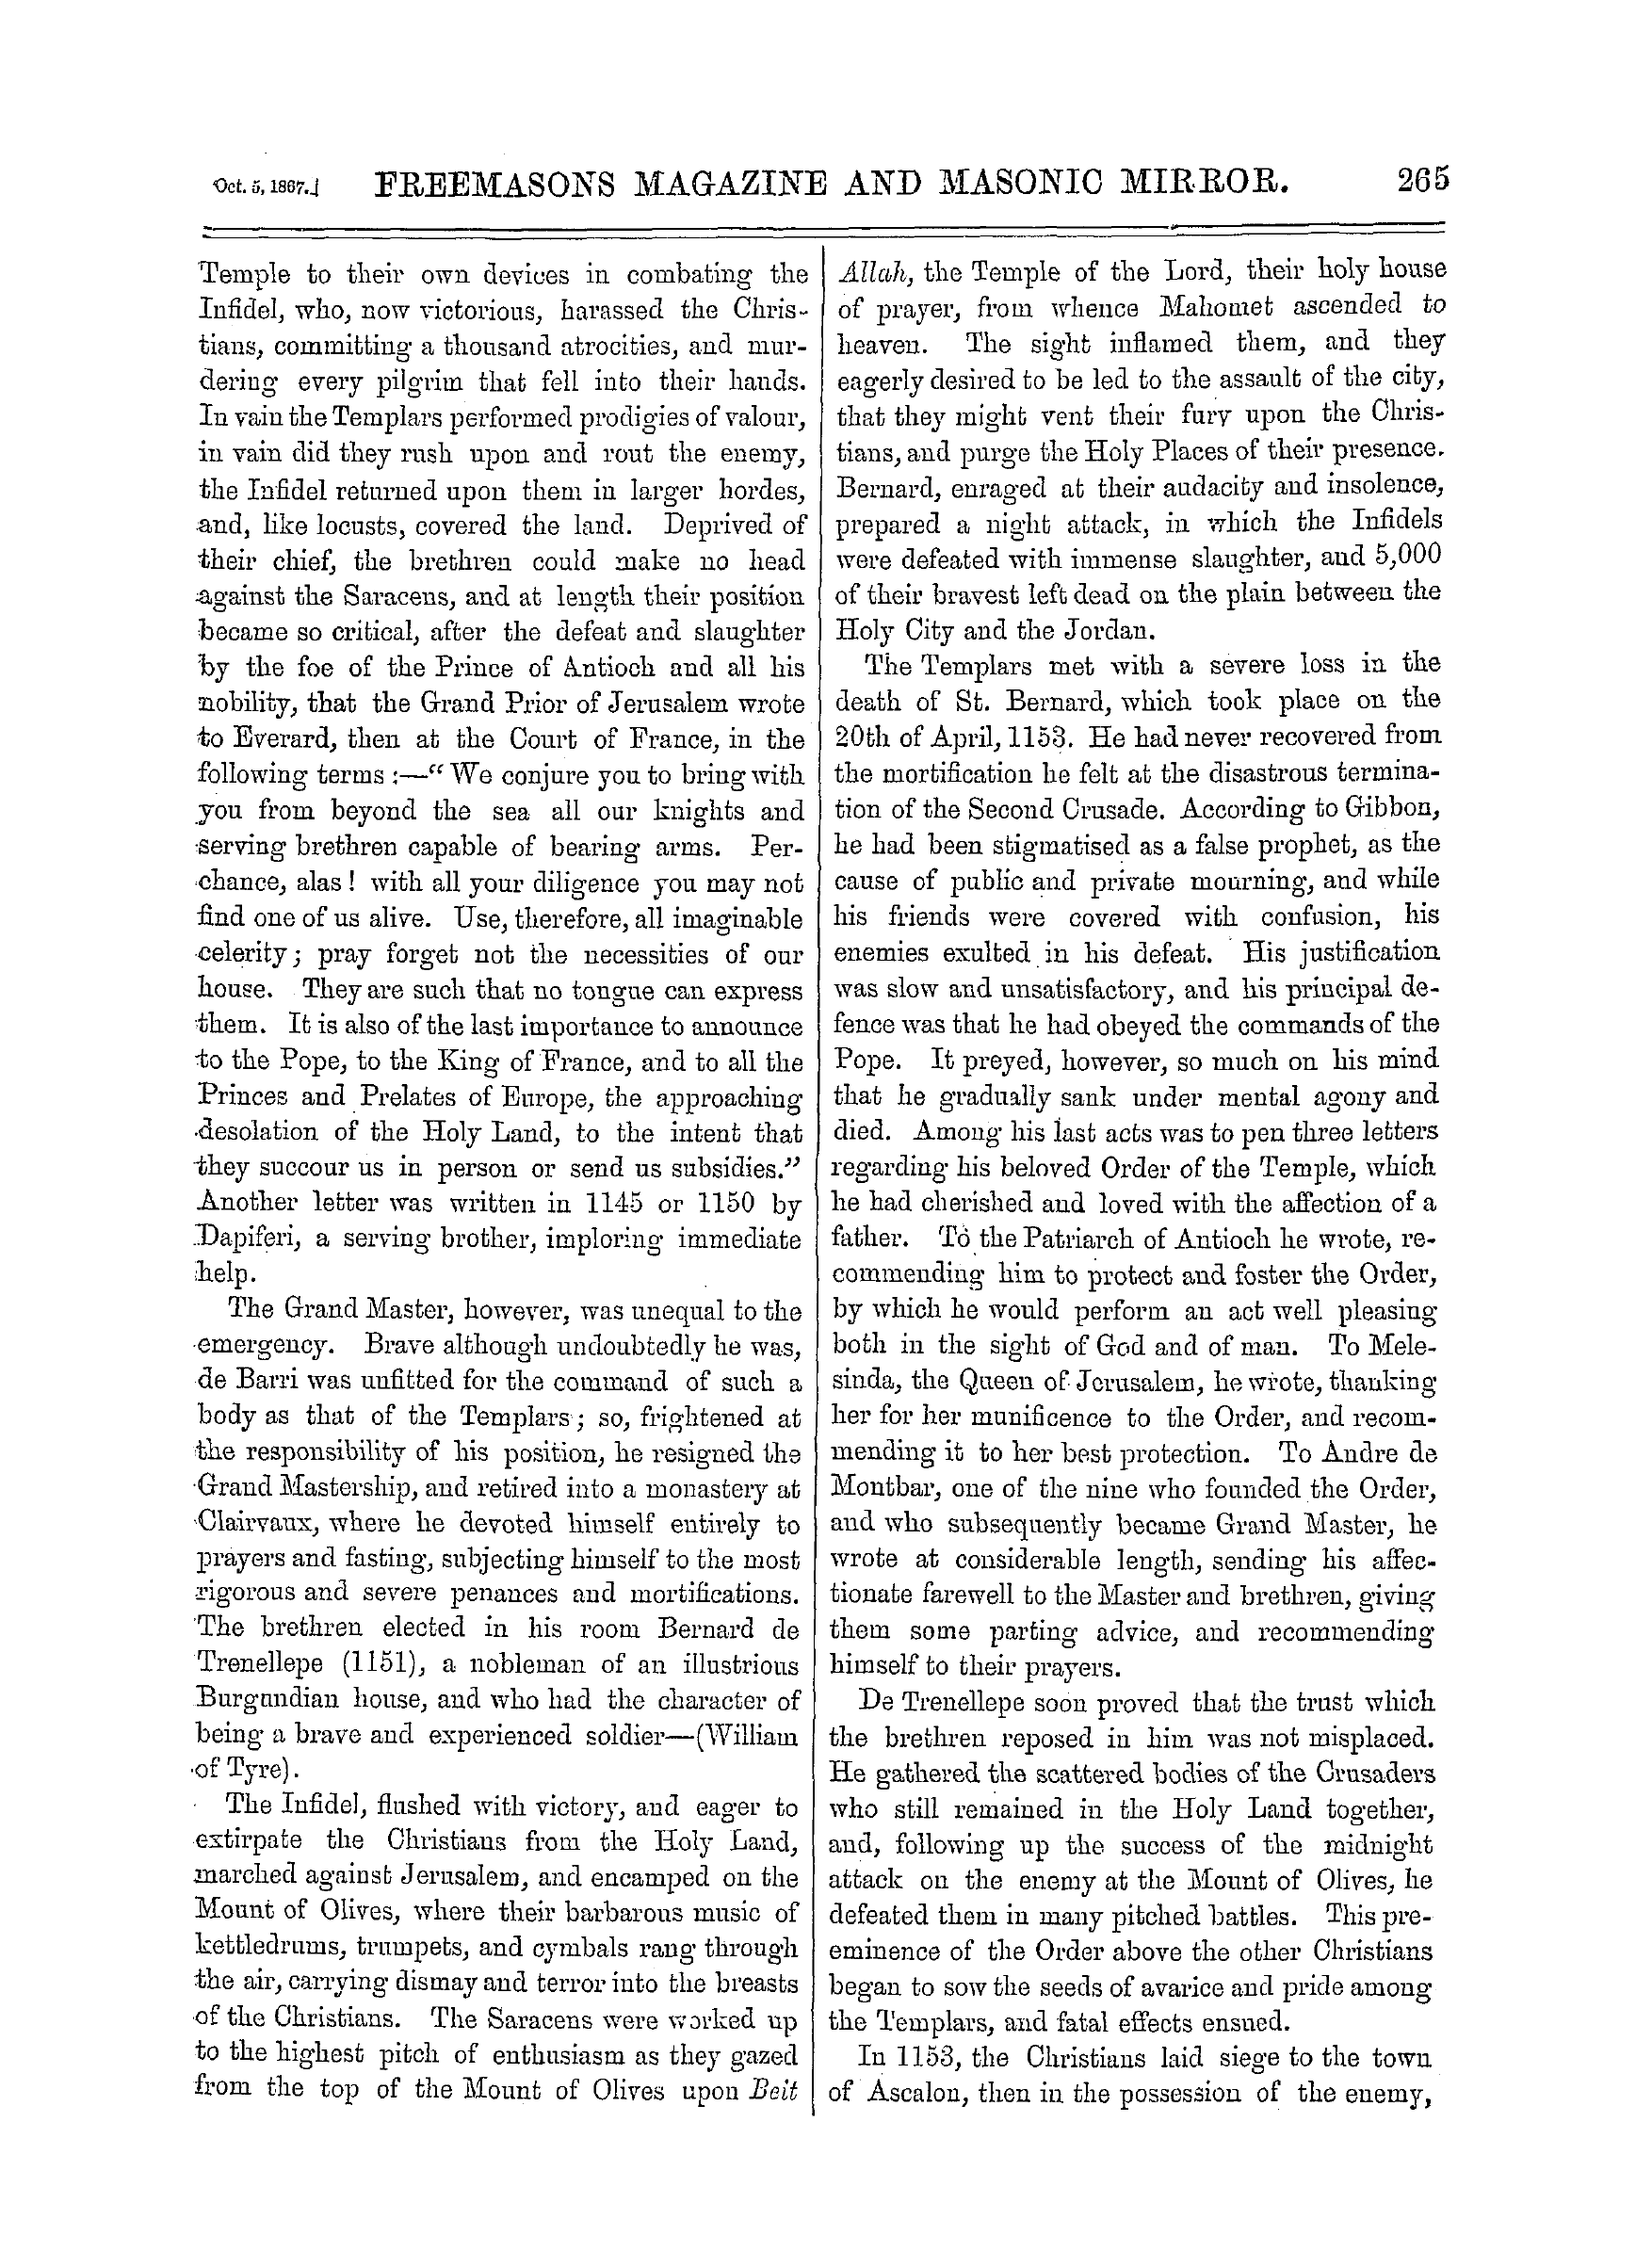 The Freemasons' Monthly Magazine: 1867-10-05 - The Knights Templars.